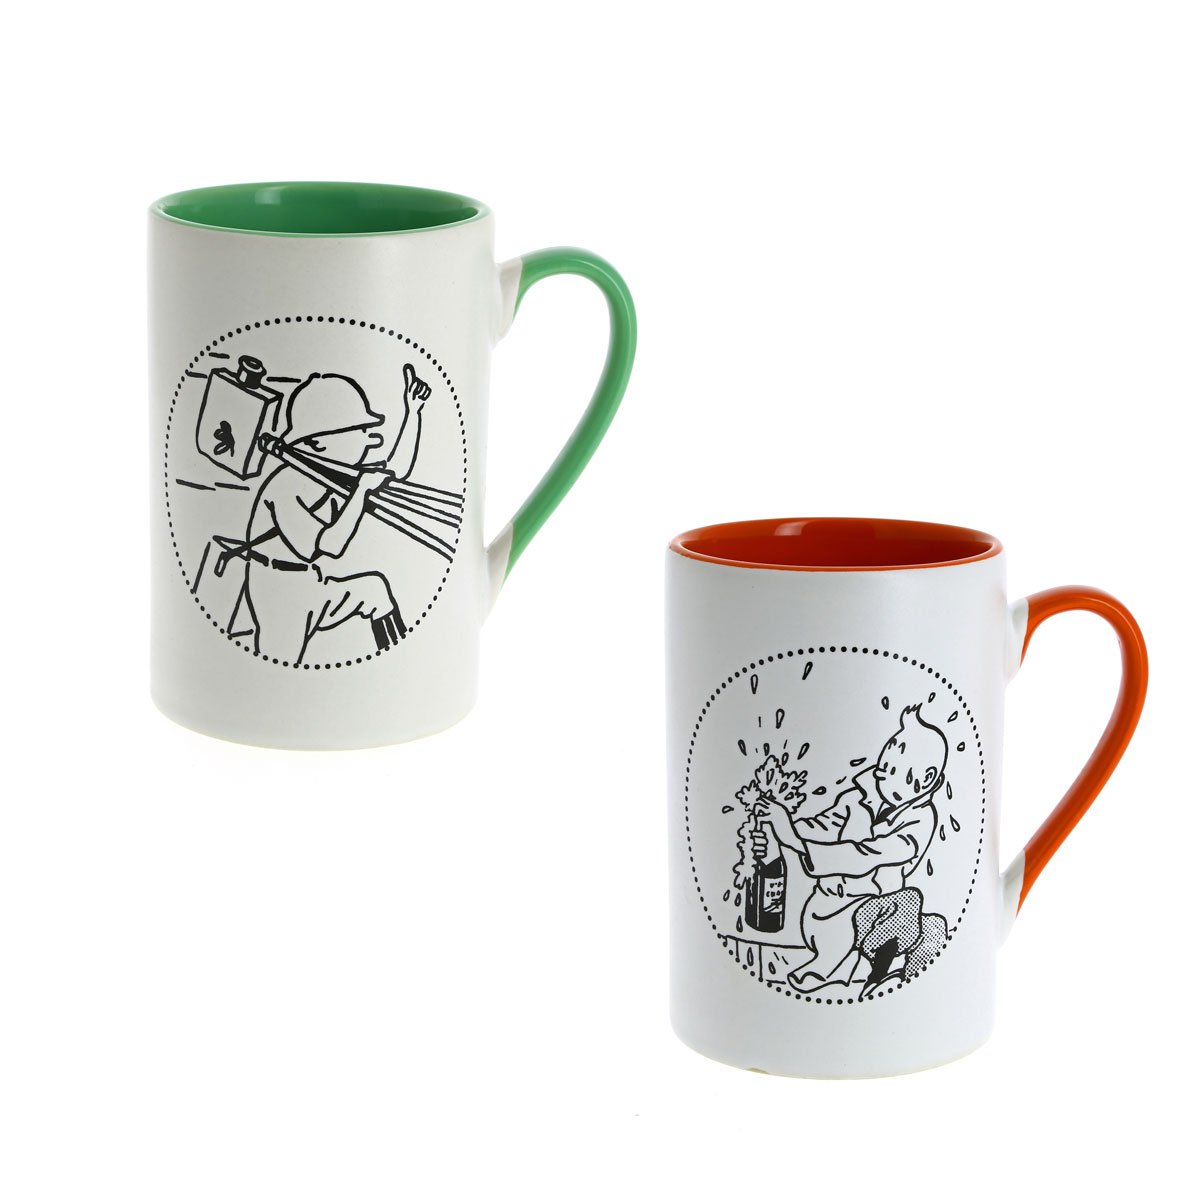 Red & green Tintin mugs